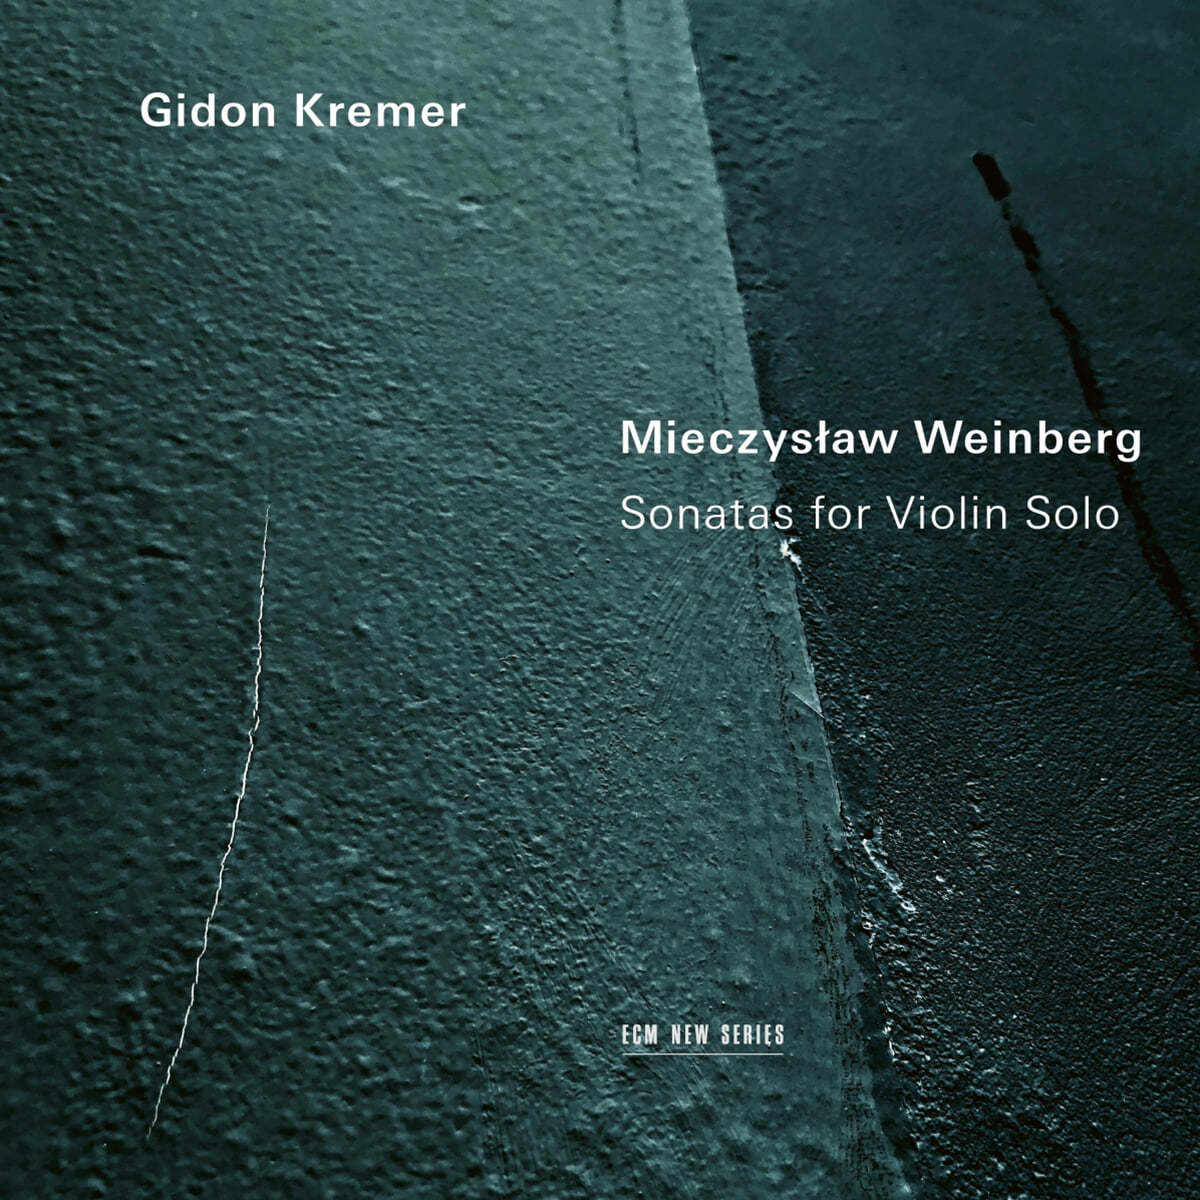 Gidon Kremer 바인베르크: 바이올린 솔로를 위한 소나타 - 기돈 크레머 (Mieczyslaw Weinberg: Sonatas For Violin Solo)